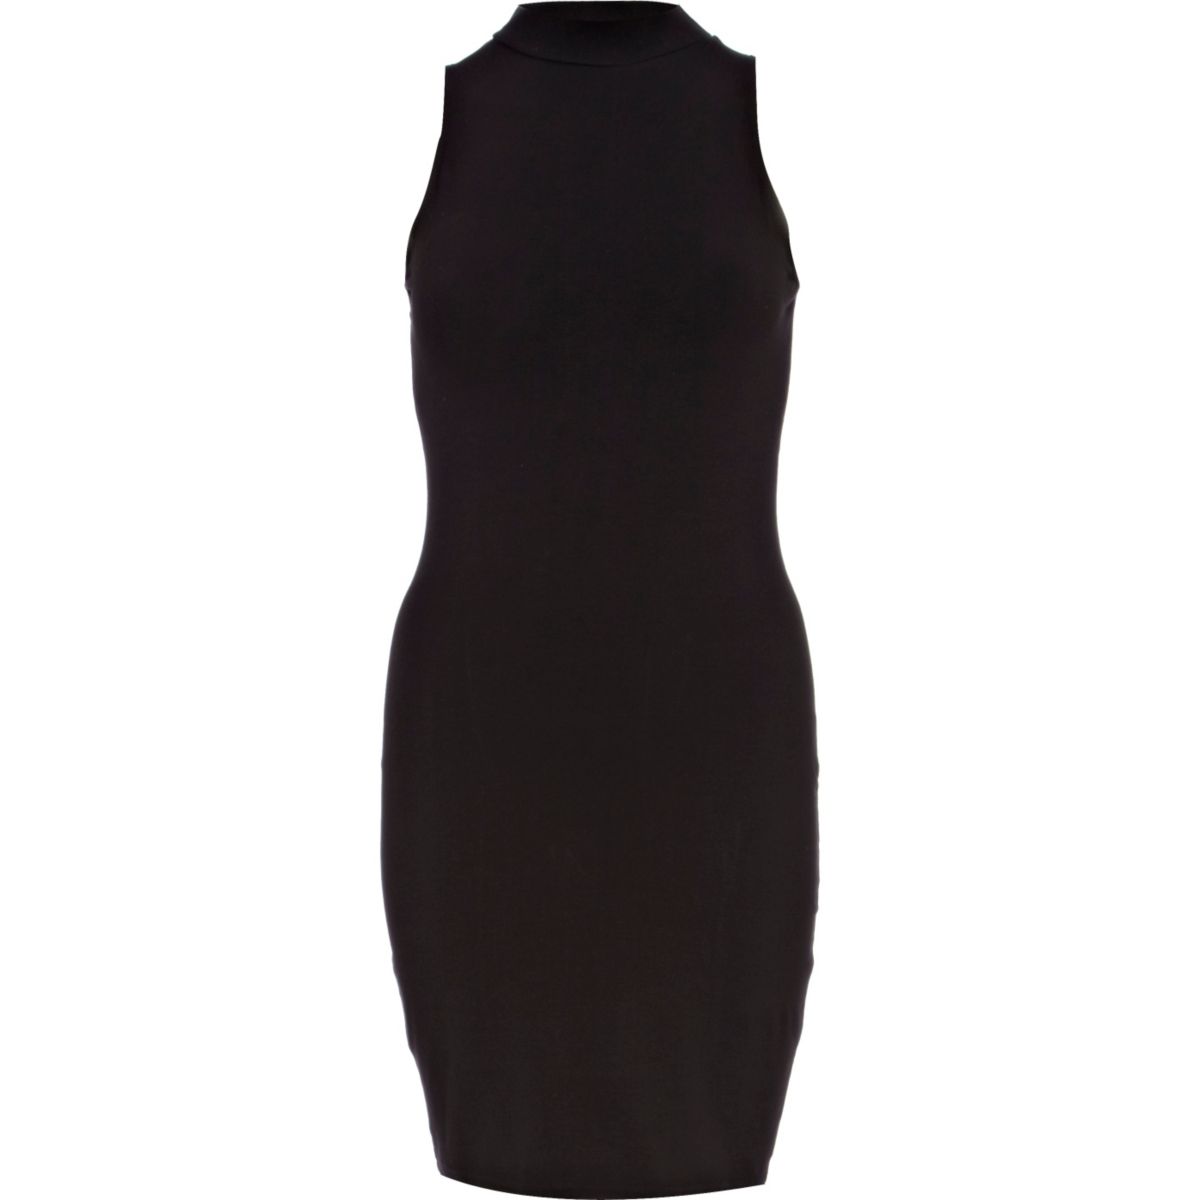 Black turtle neck sleeveless bodycon dress - Dresses - Sale - women